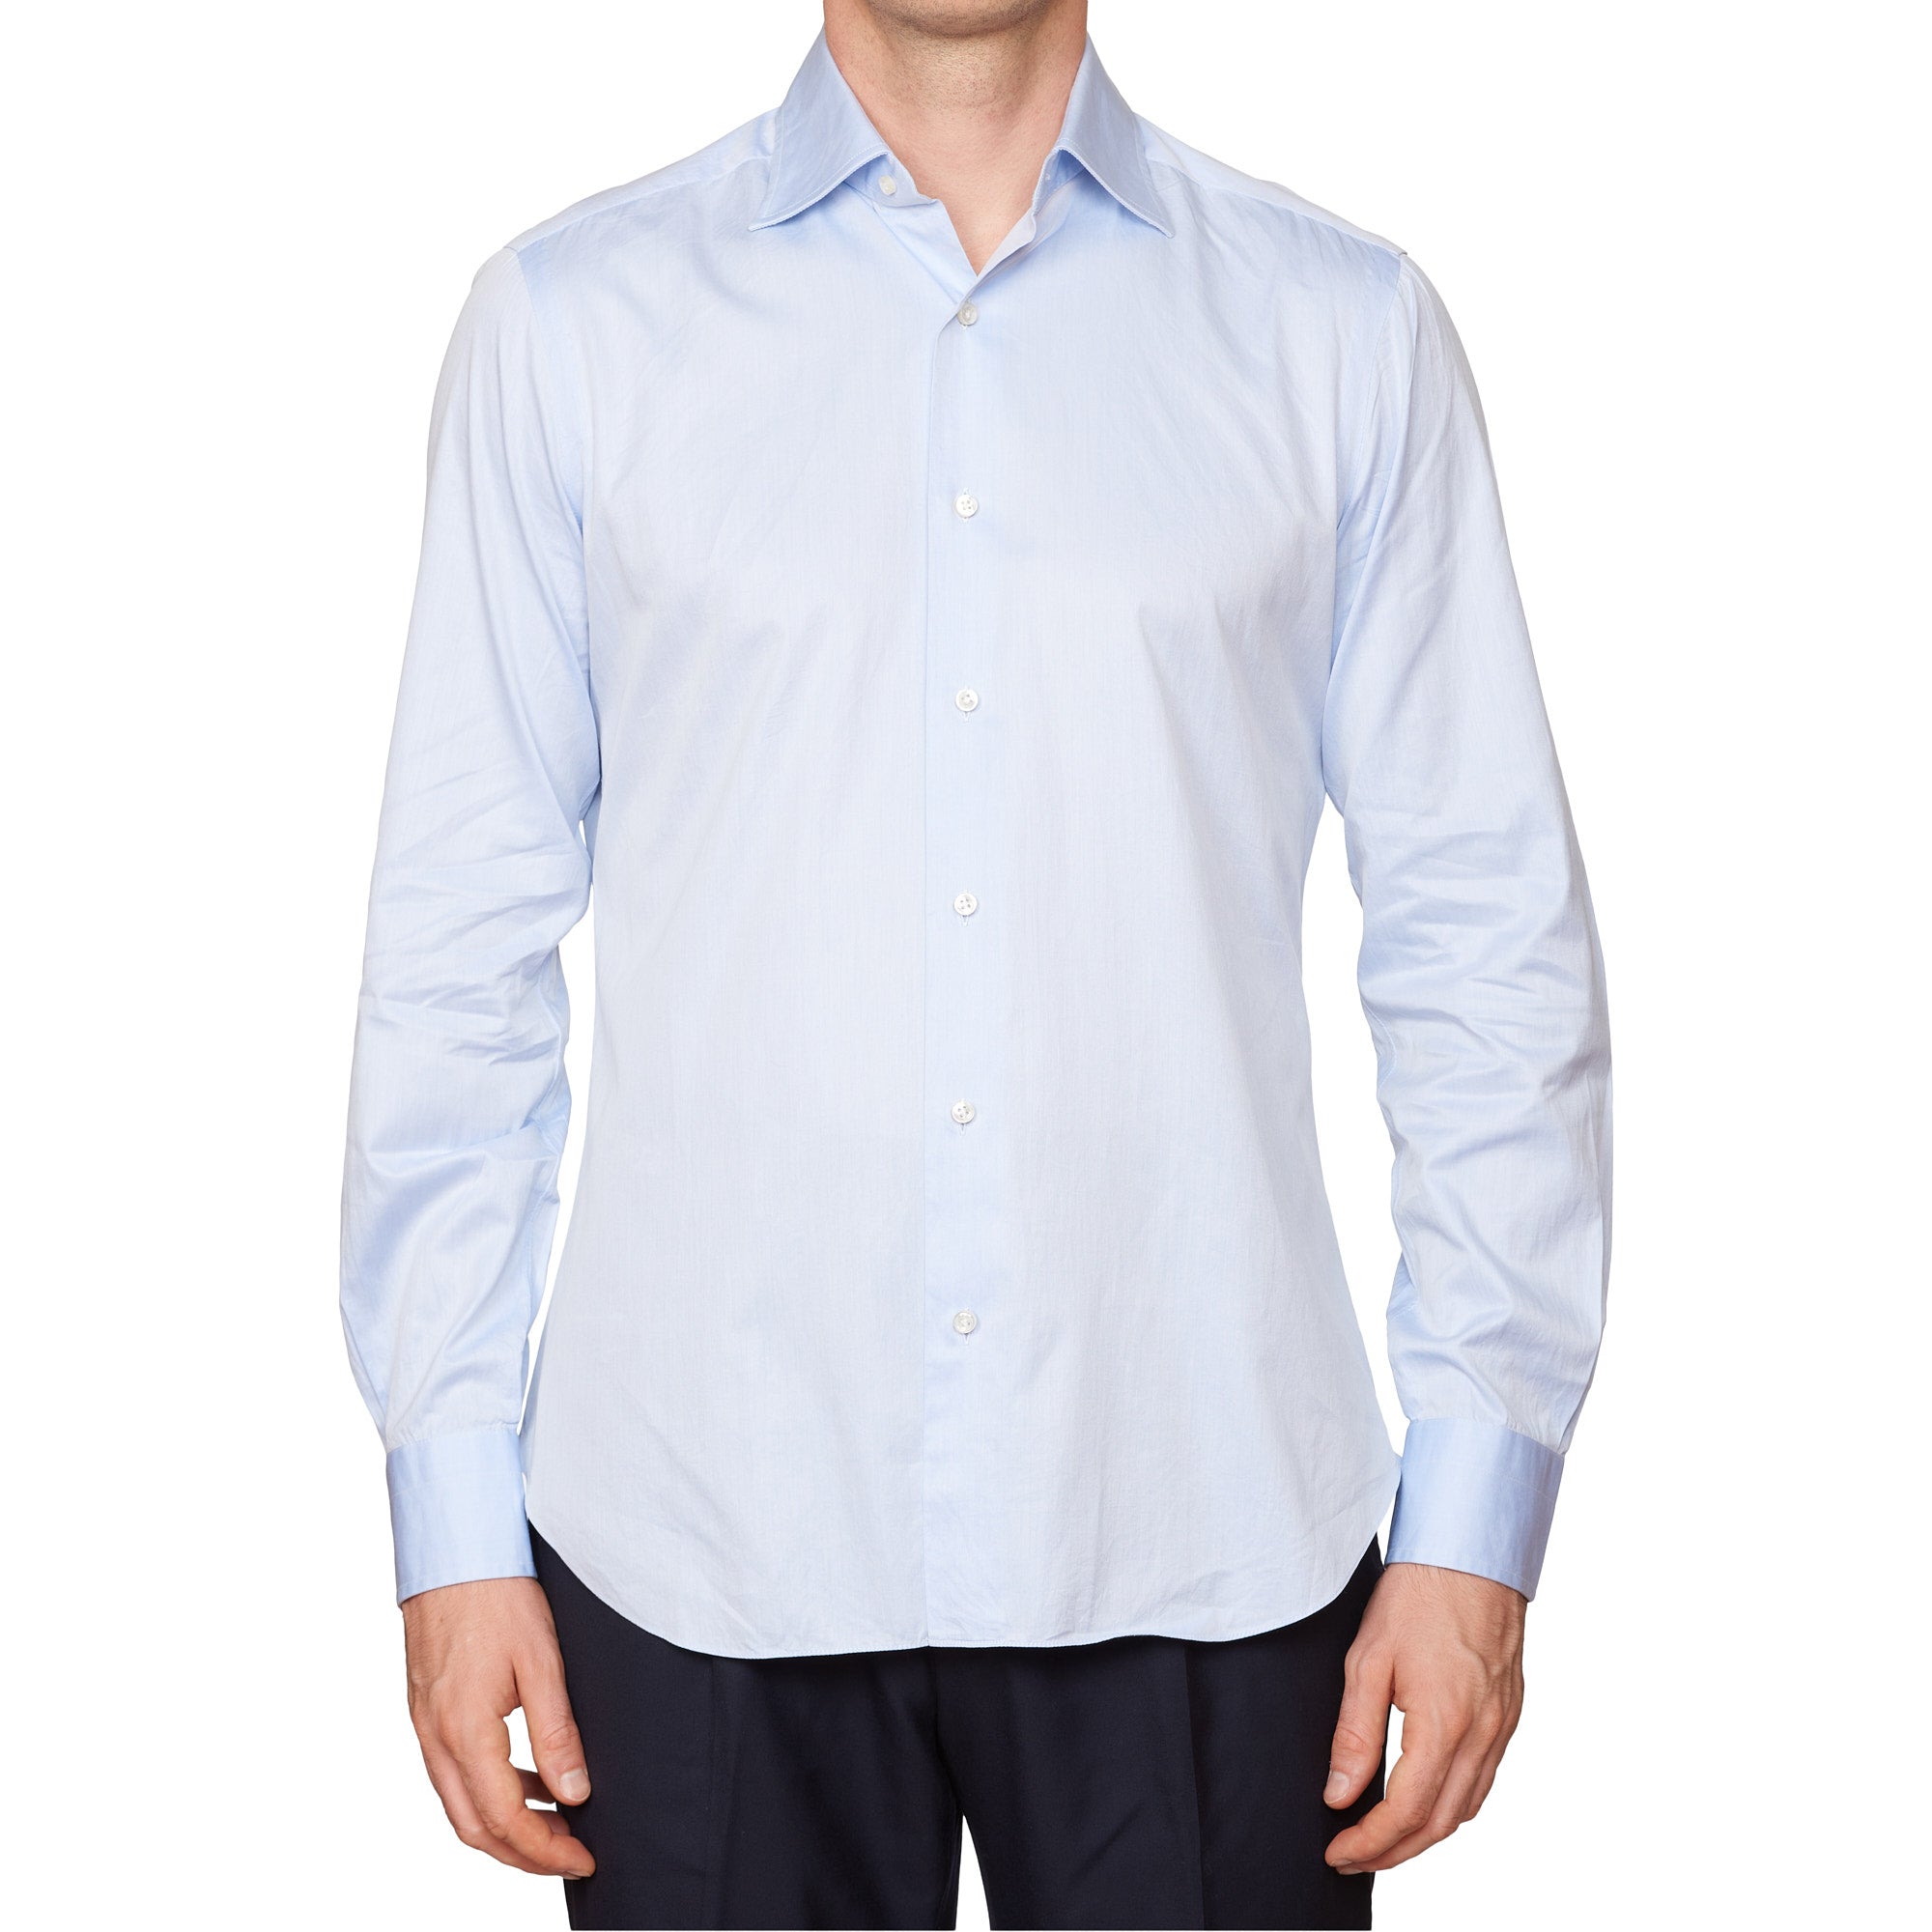 BARBA Napoli Handmade Solid Blue Twill Cotton Dress Shirt EU 40 US 15.75 Slim Fit